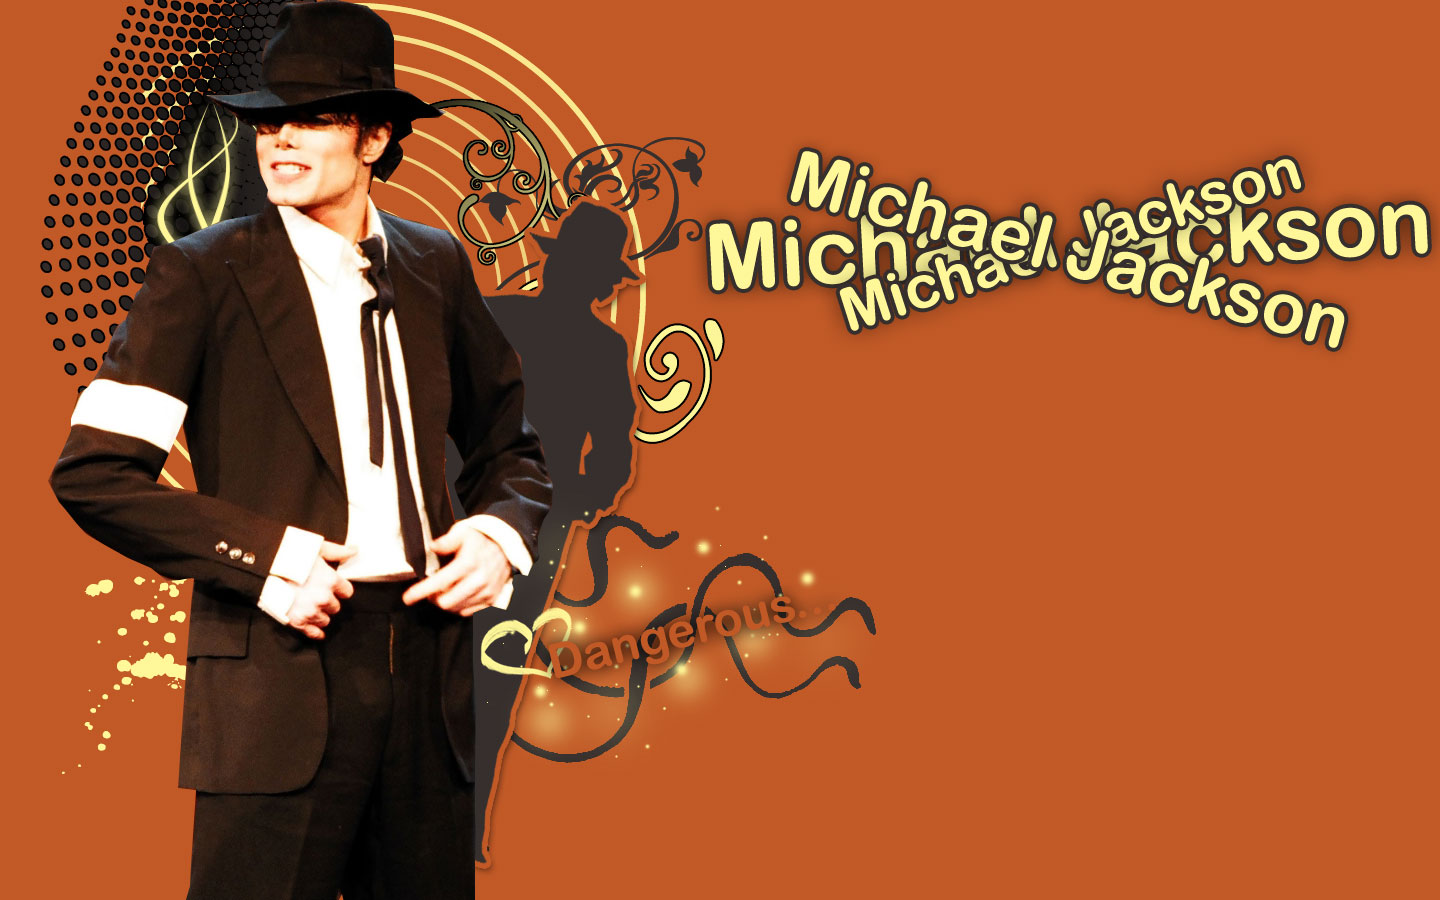 Майкл Джексон обои